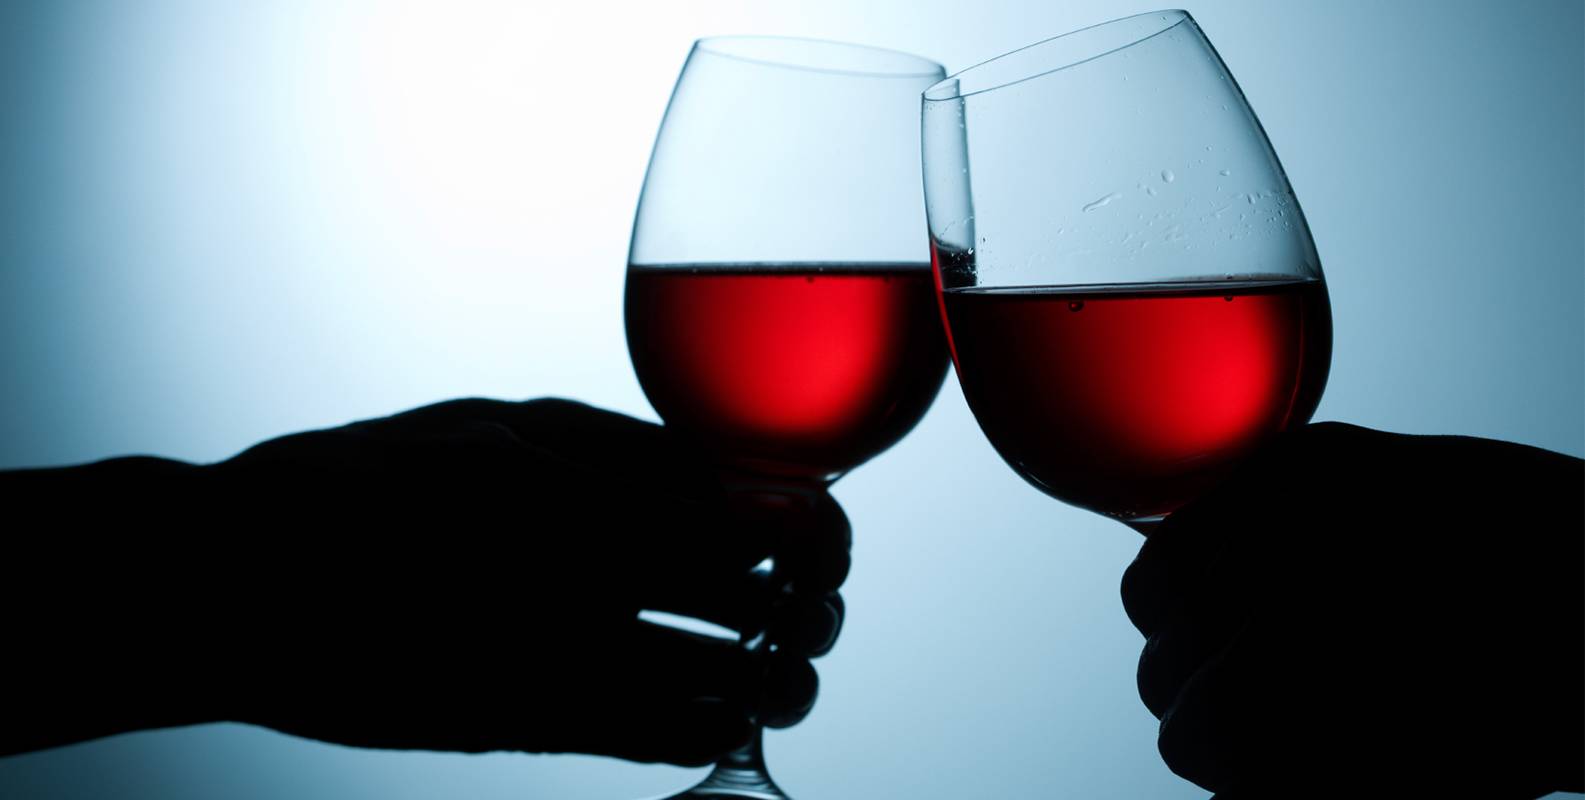 Два бокала вина бабек. Фужер с вином. Два бокала красного вина. Бокалы с вином чокаются. Бокал красного вина.